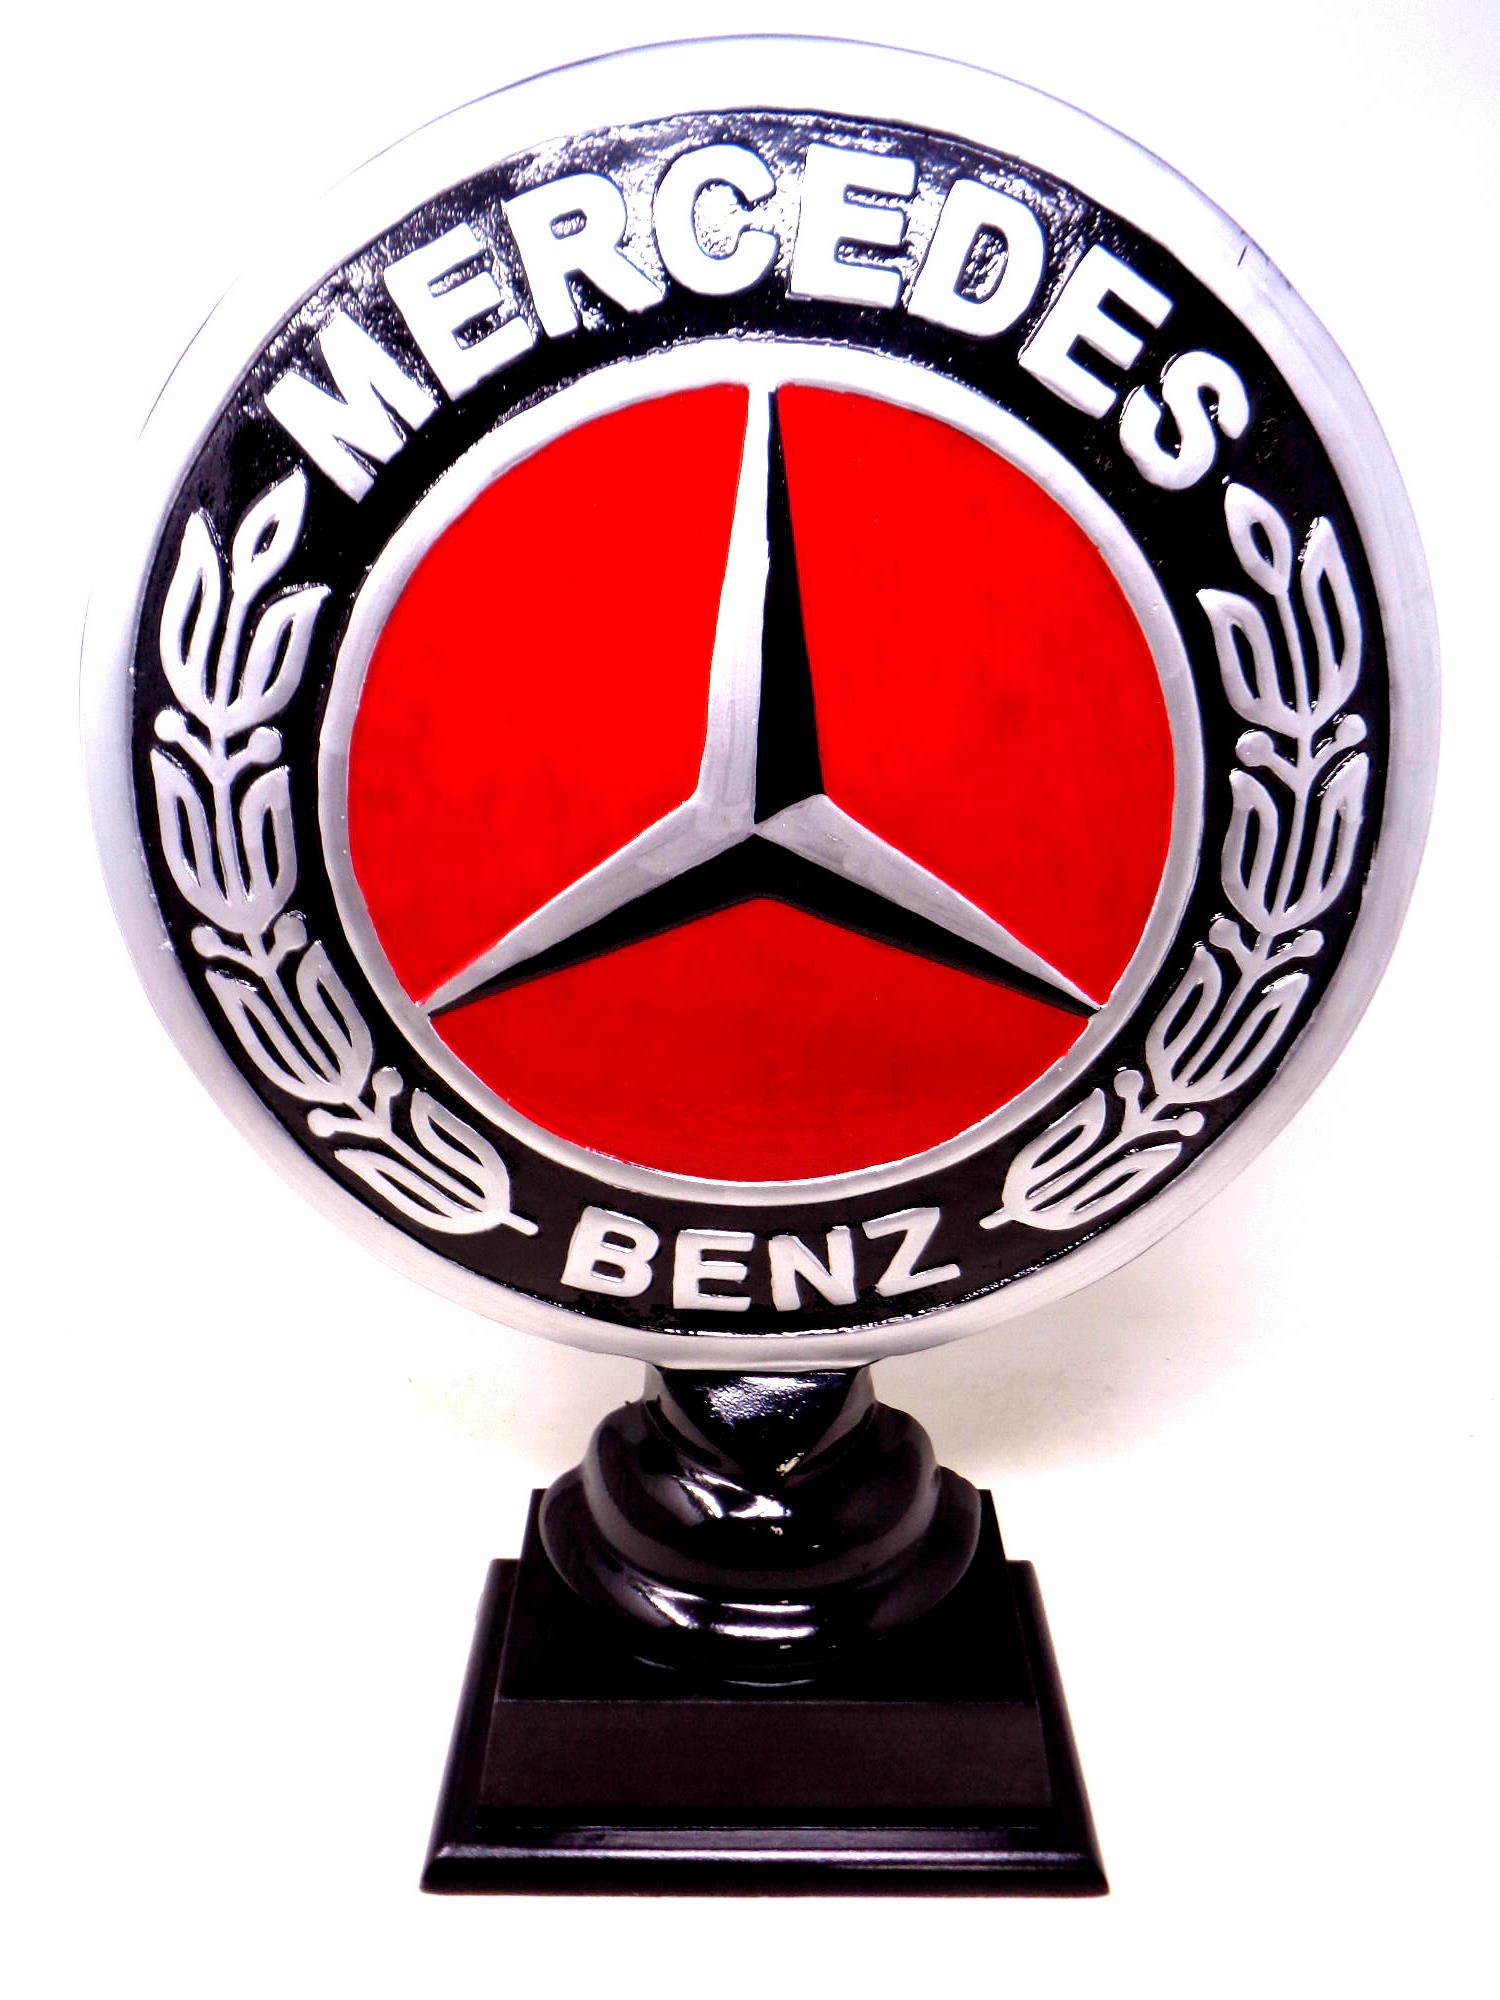 A Mercedes display logo